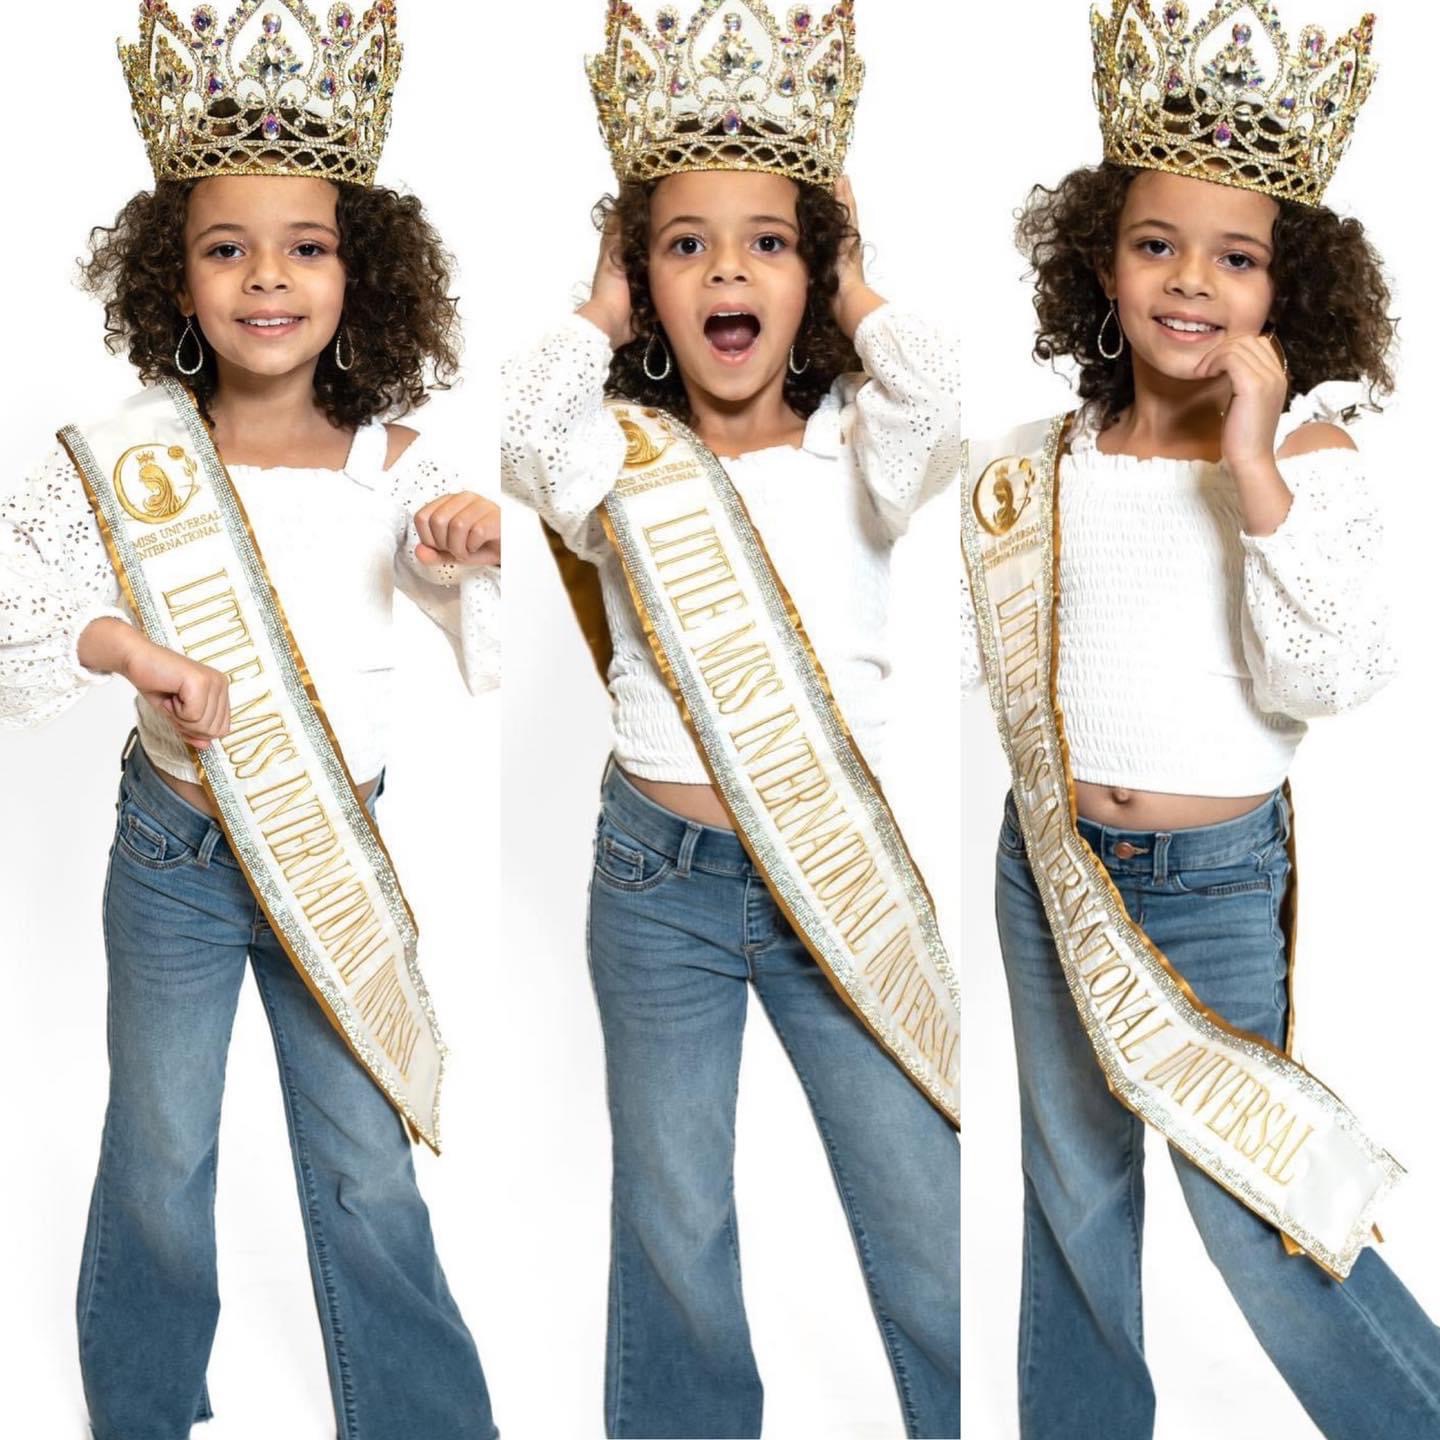 Kaliyah Cooper crowned Little Miss International Universal 2023